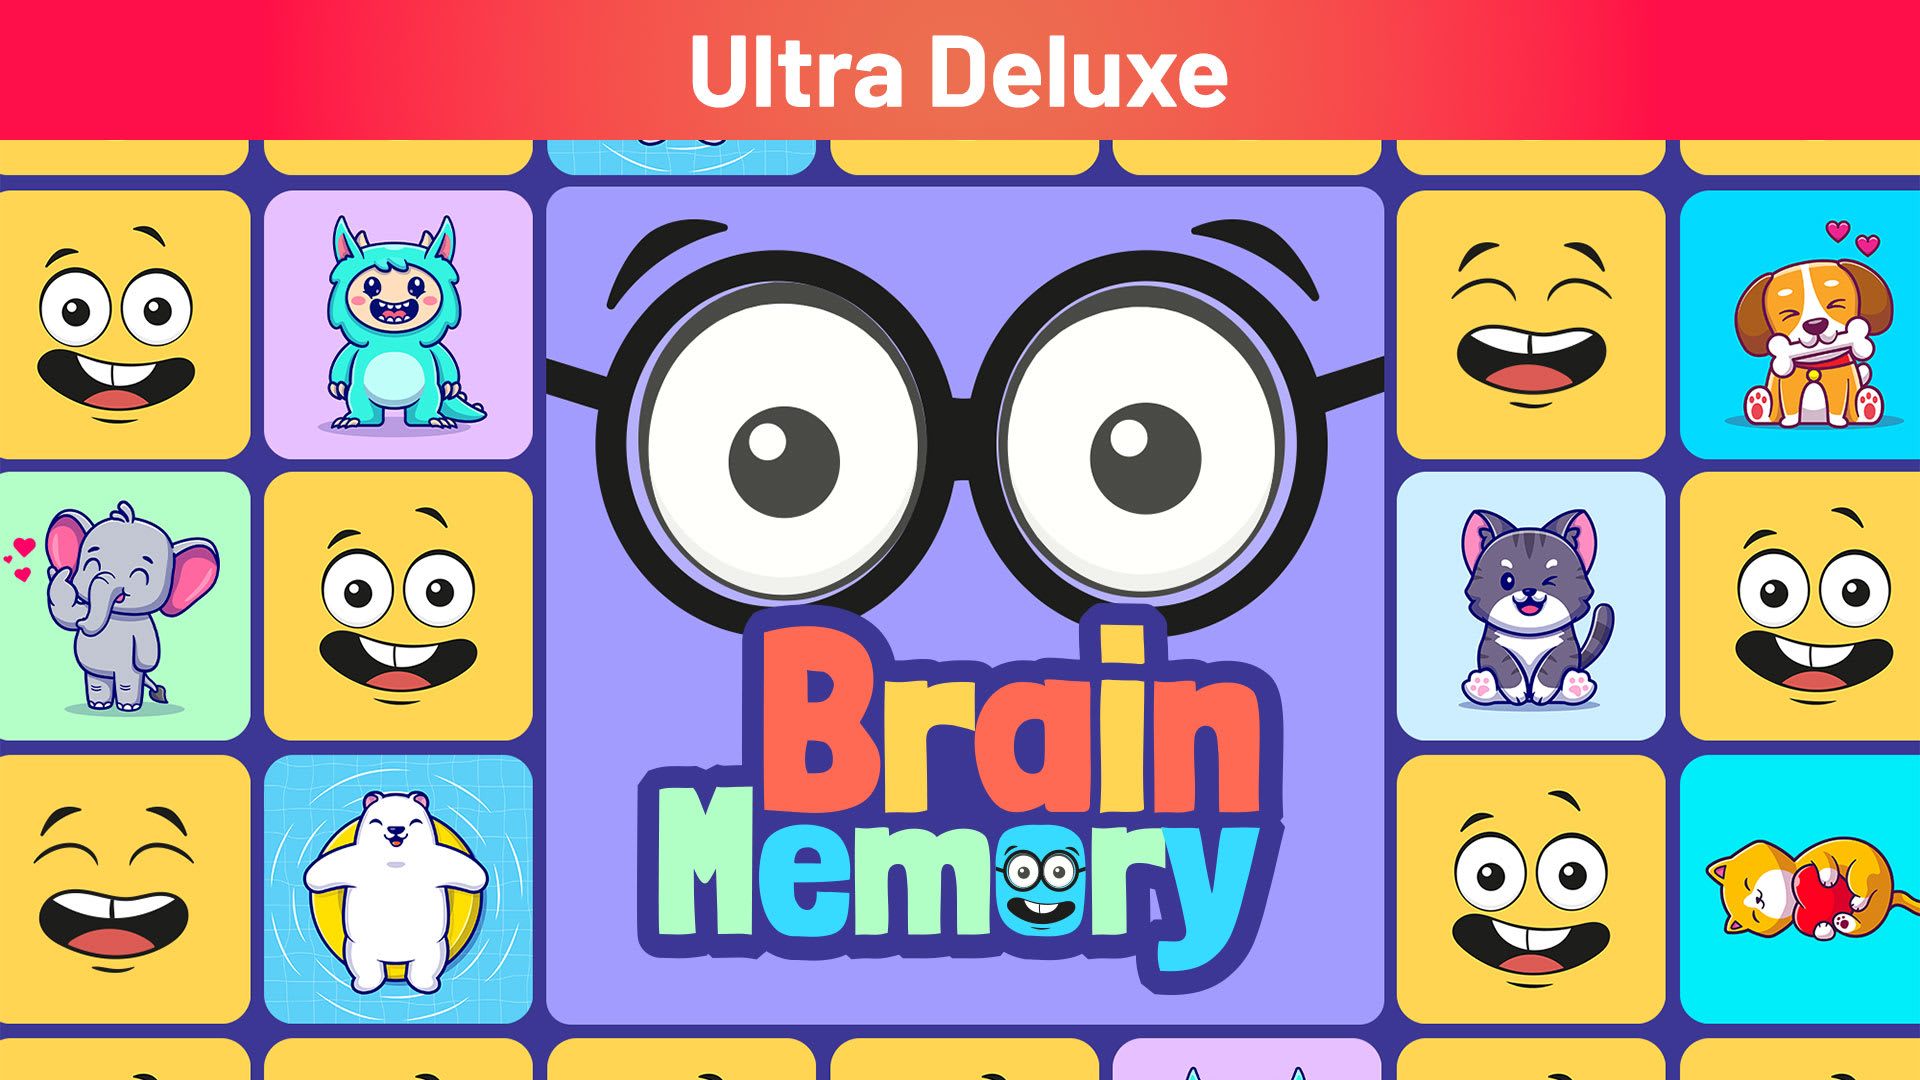 Brain Memory Ultra Deluxe